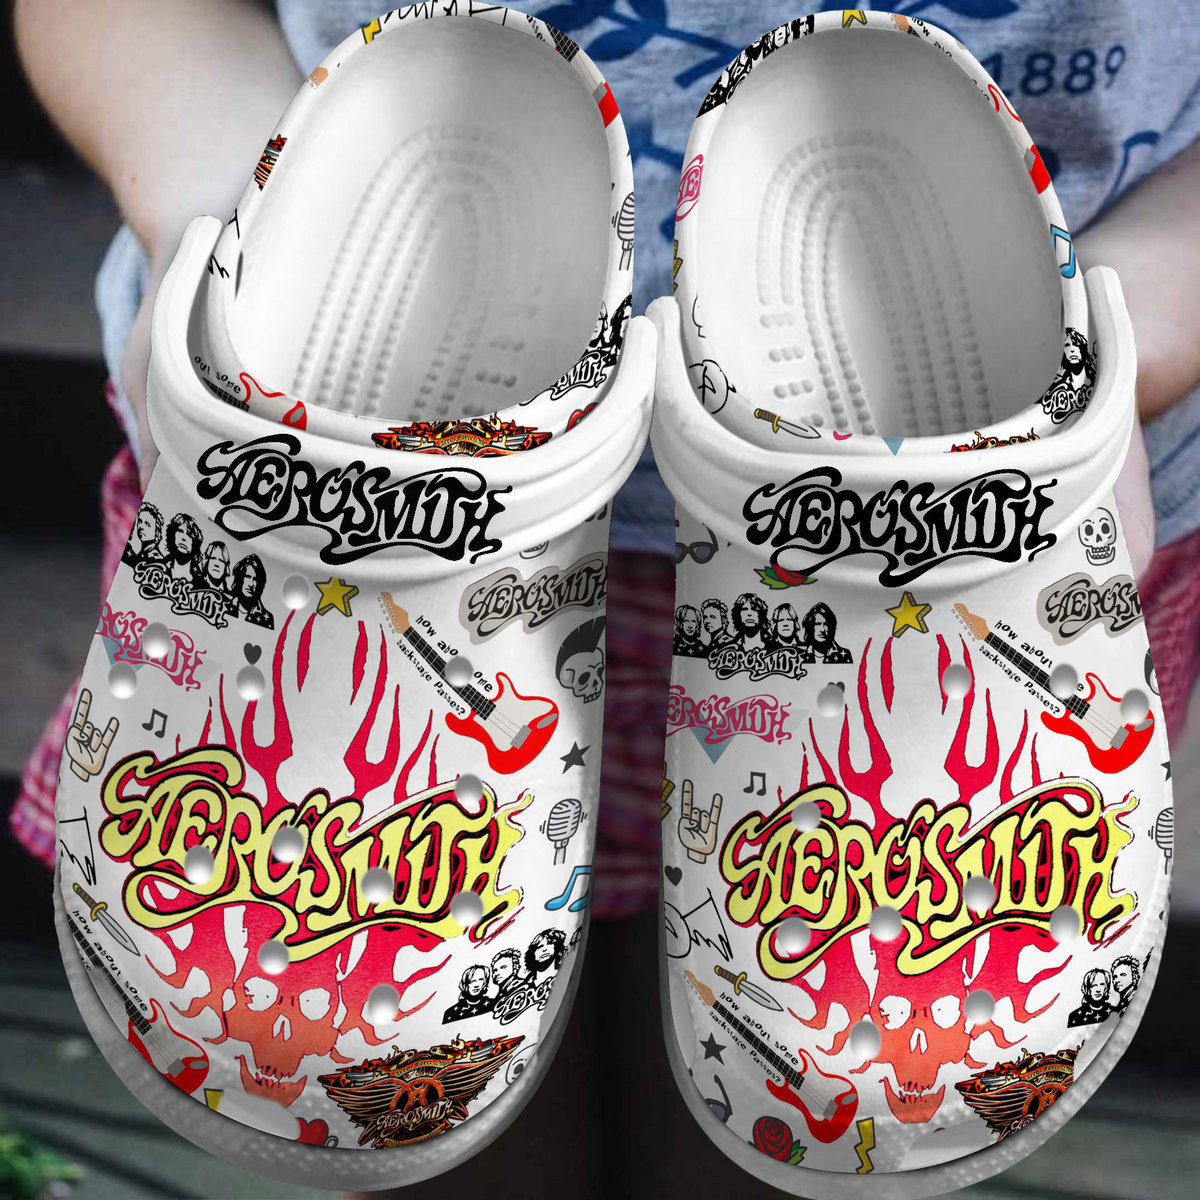 Aerosmith Music Crocs Crocband Clogs Shoes Comfortable For Men Women and Kids 4